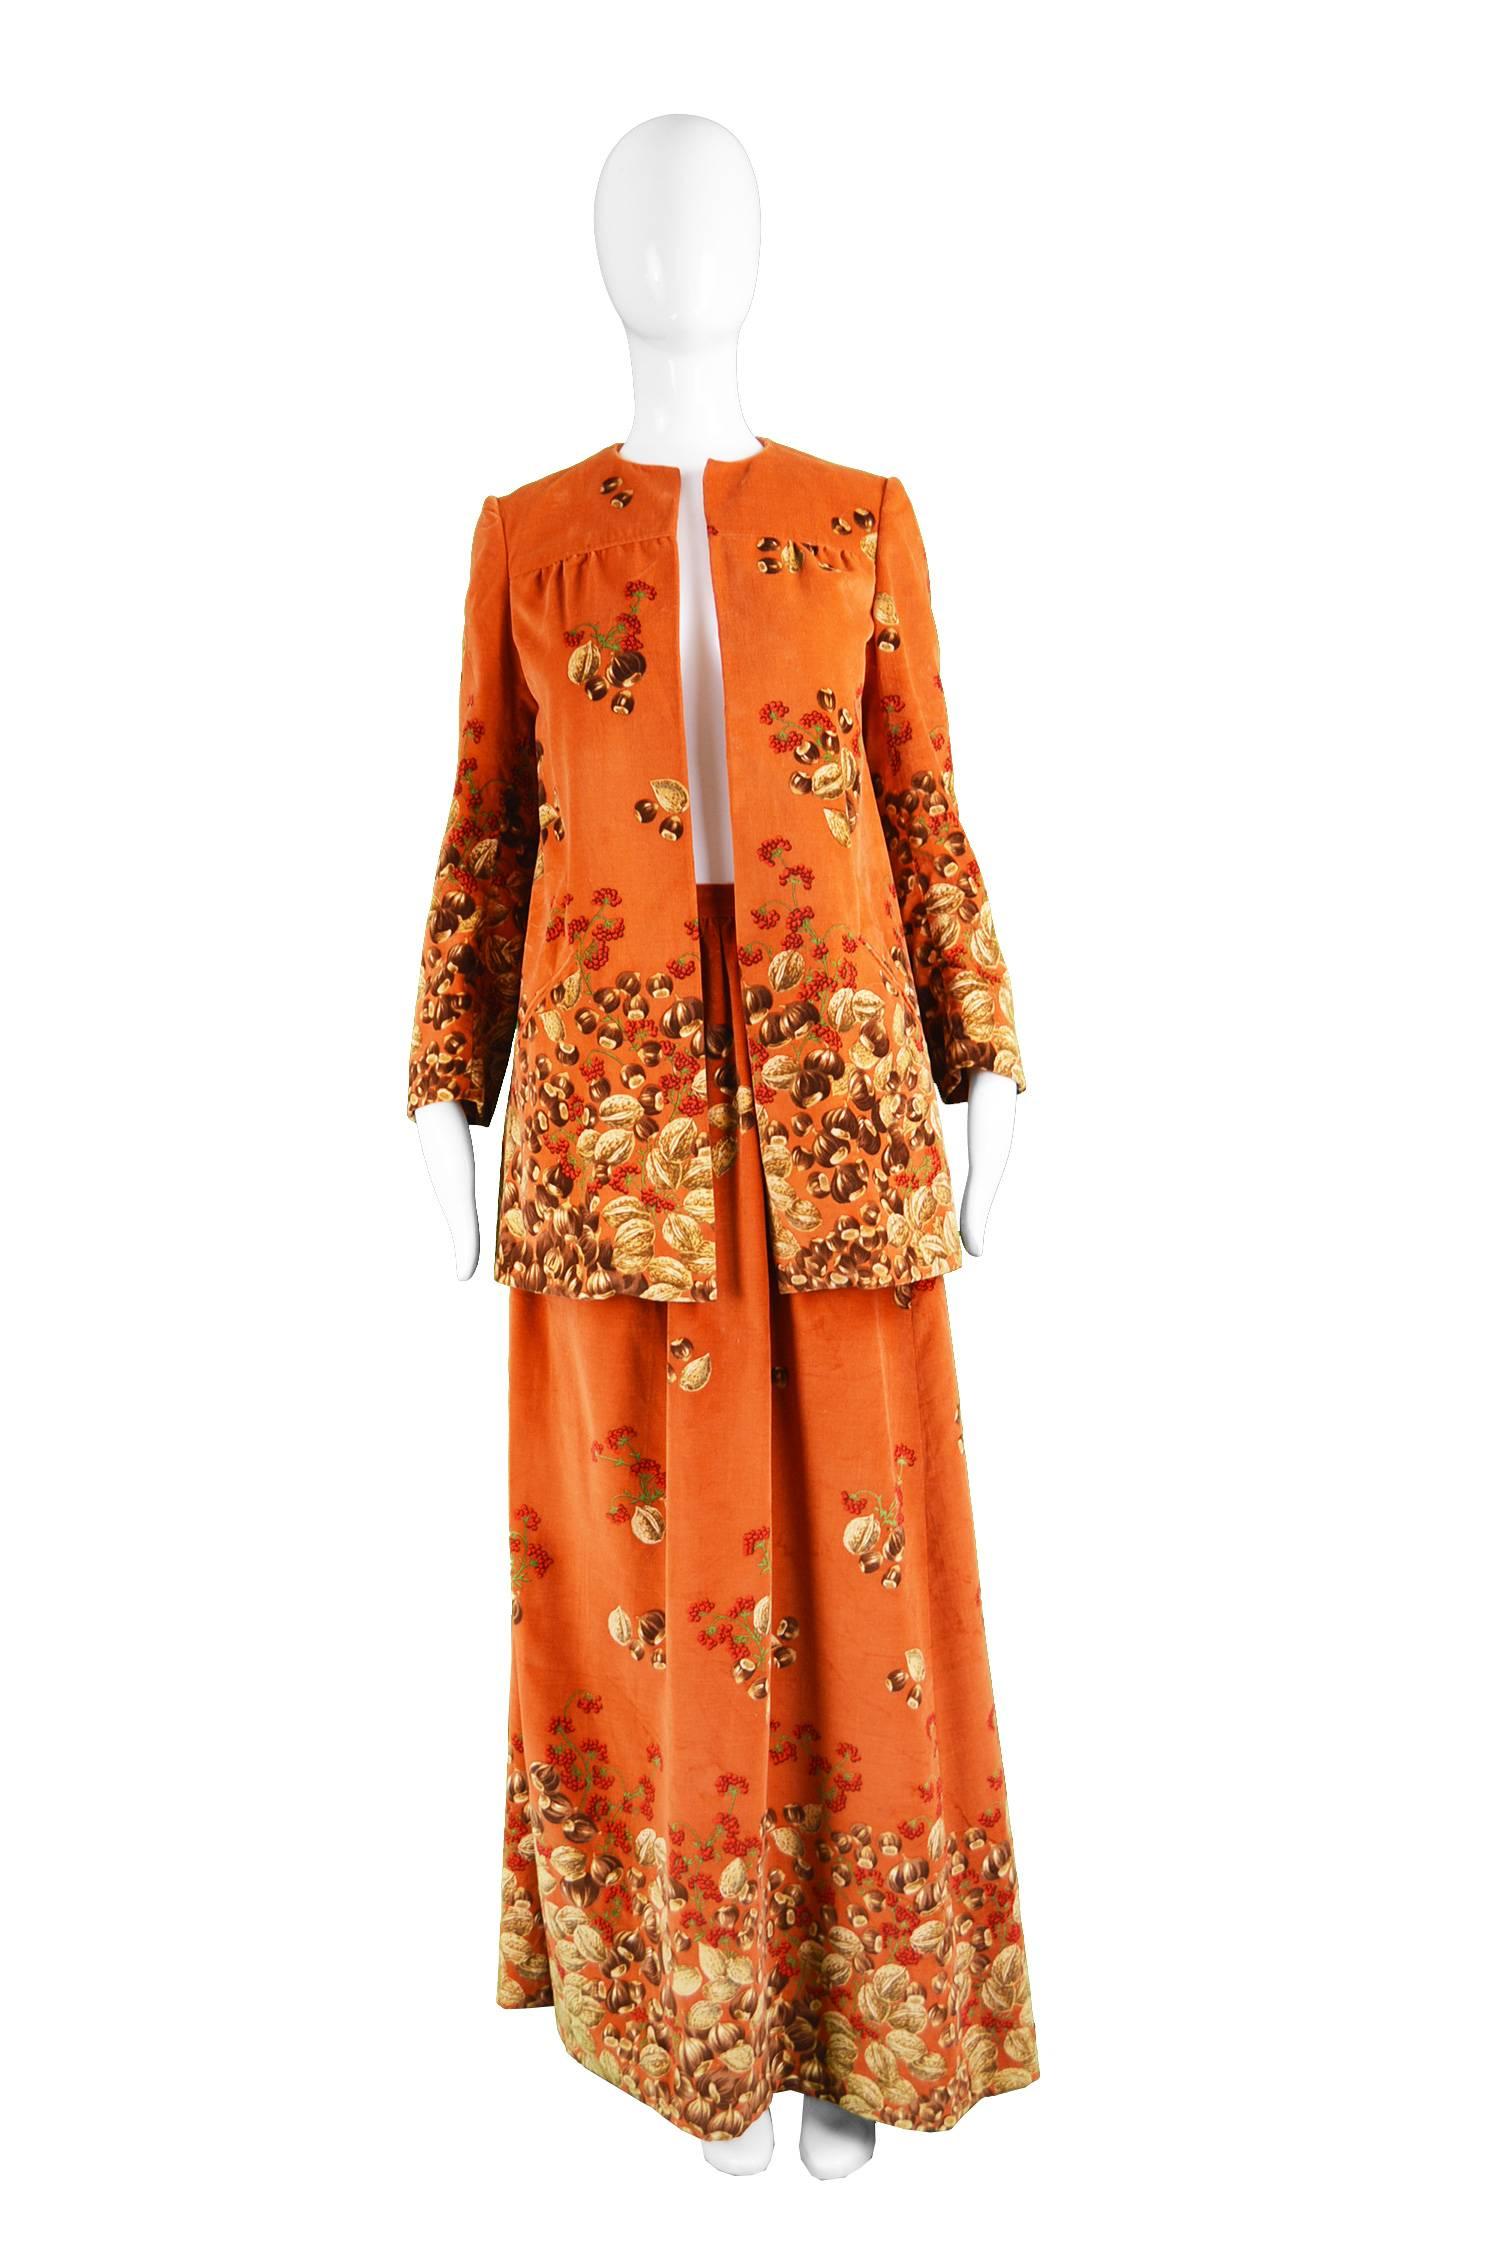 Valentino Rare Acorn Print Burnt Orange Velvet 2 Piece Skirt Suit, 1970s

Estimated Size: Women's XS. Please check measurements. 
*Jacket*
Bust - up to 36” / 91cm (meant to have a loose fit)
Length (Shoulder to Hem) - 29” / 73cm
Shoulder to Shoulder